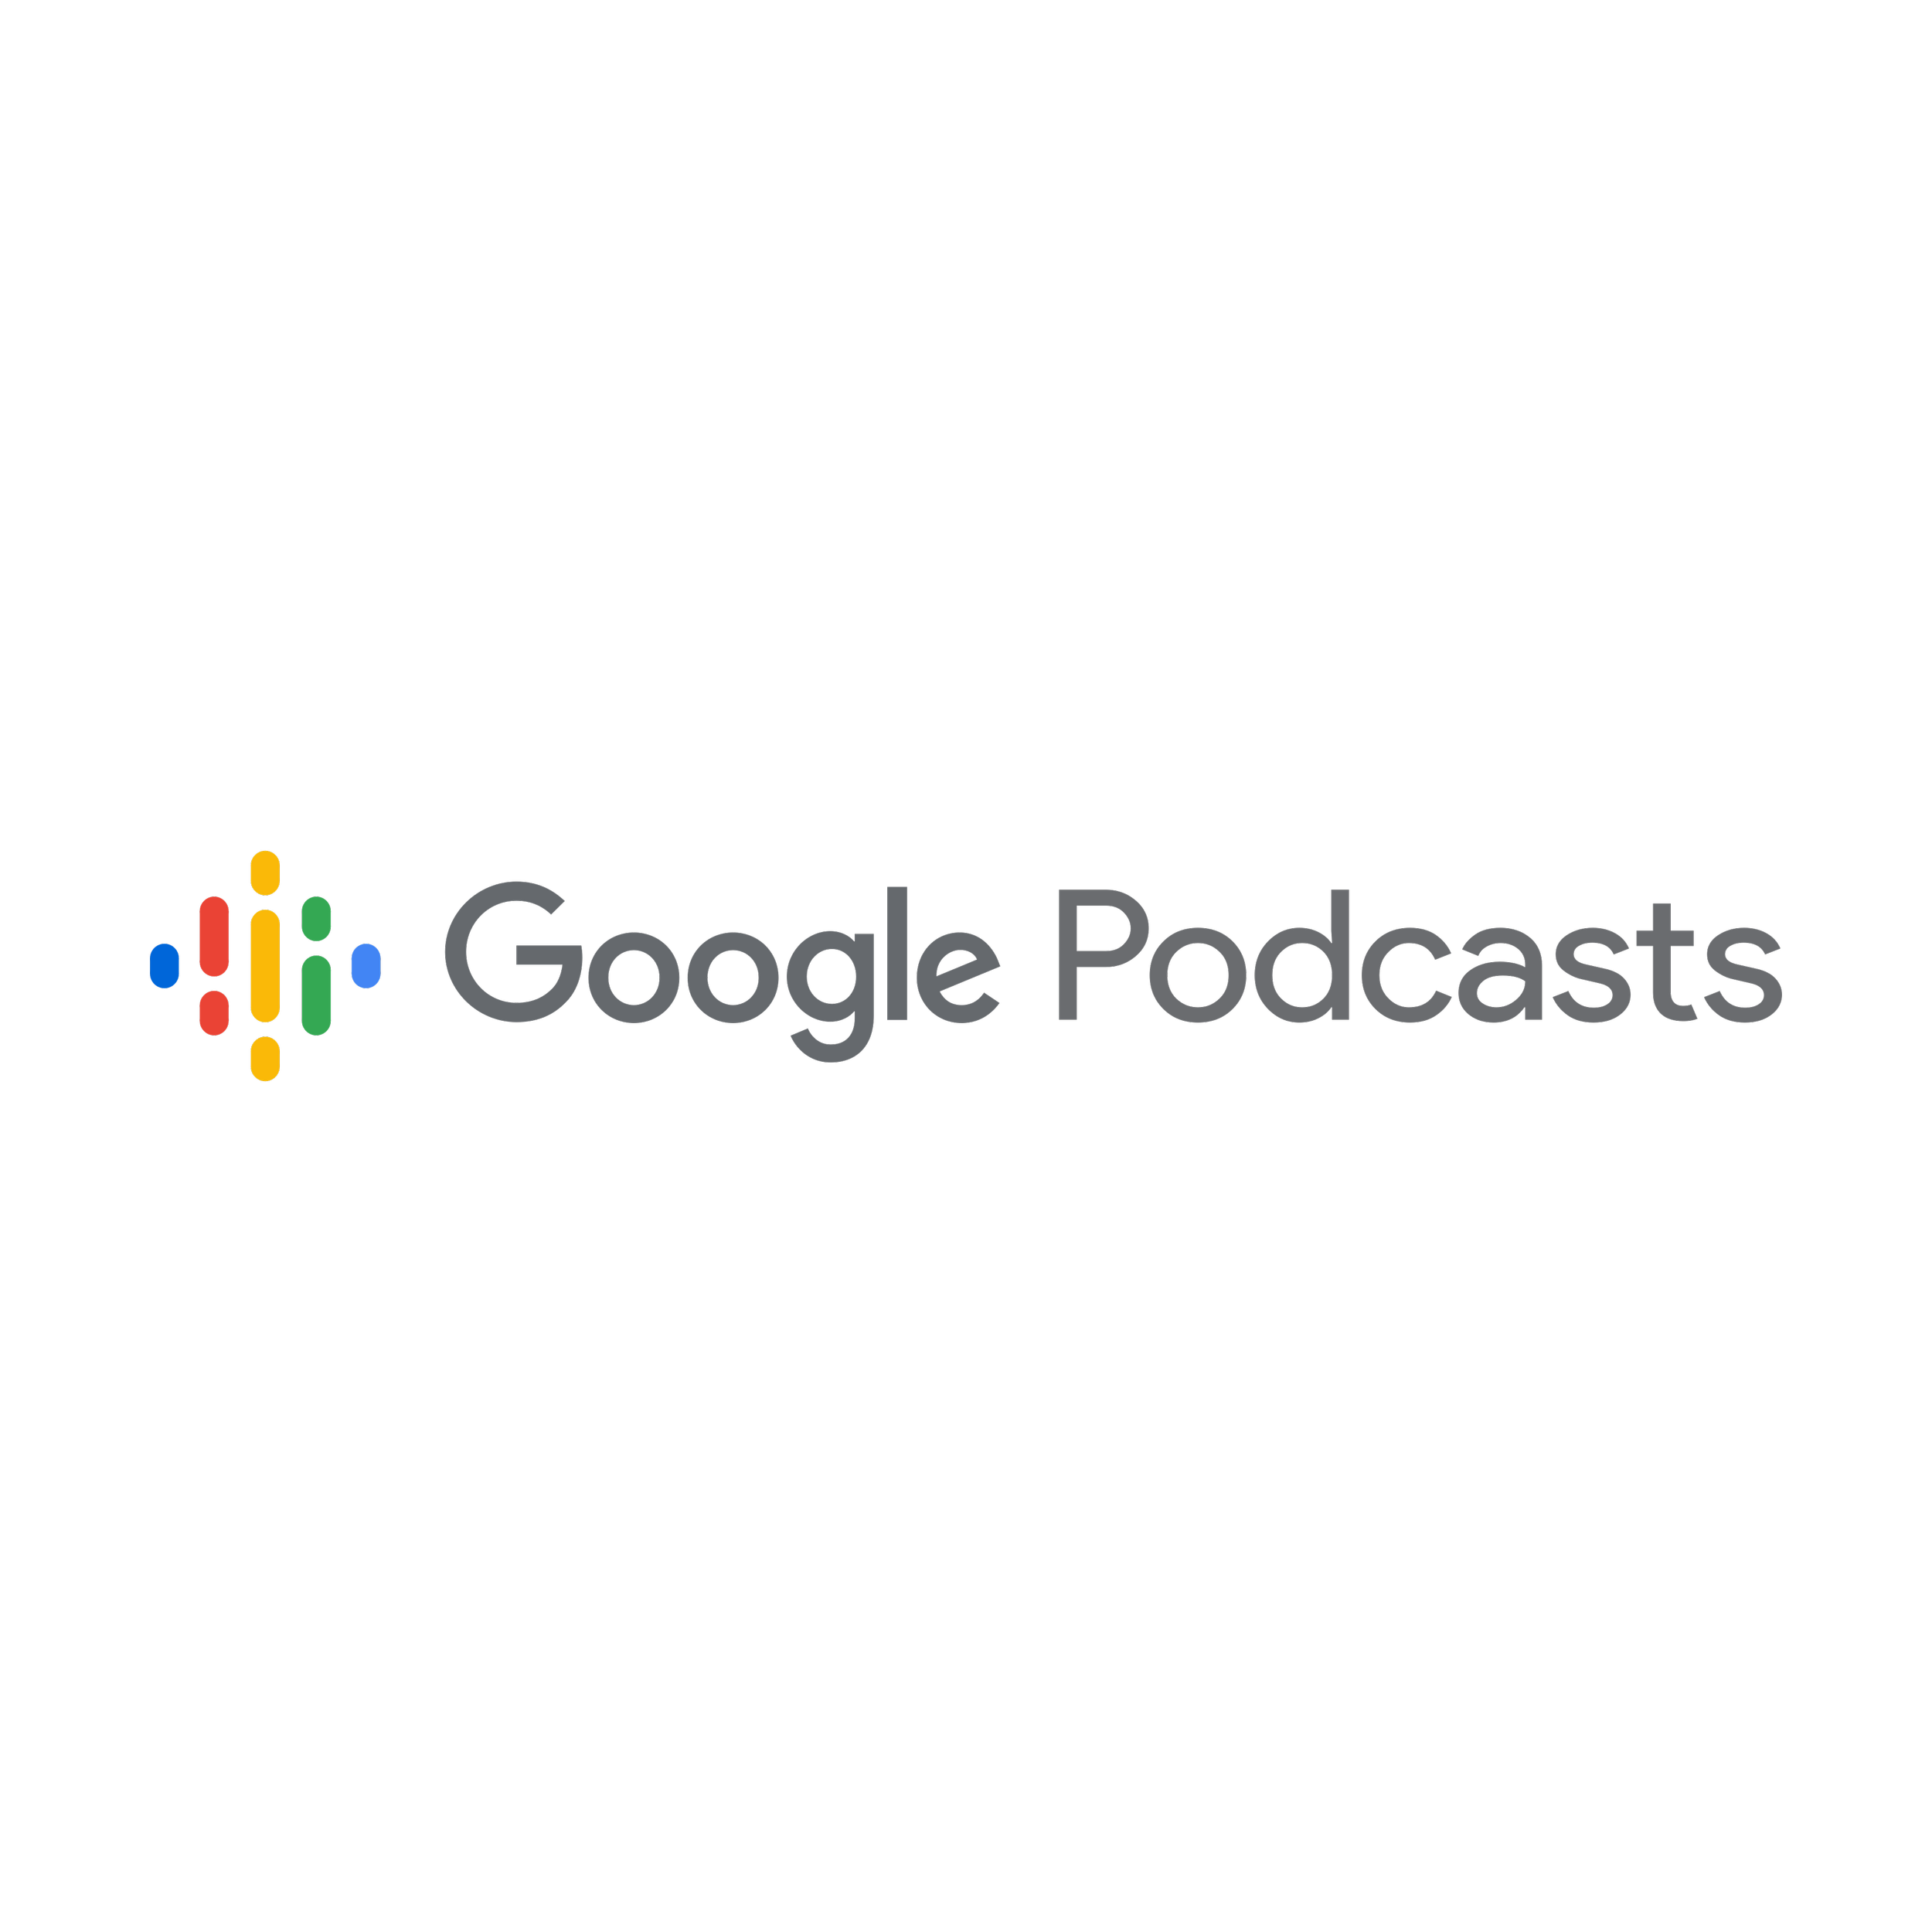 google-podcasts-logo-0.png